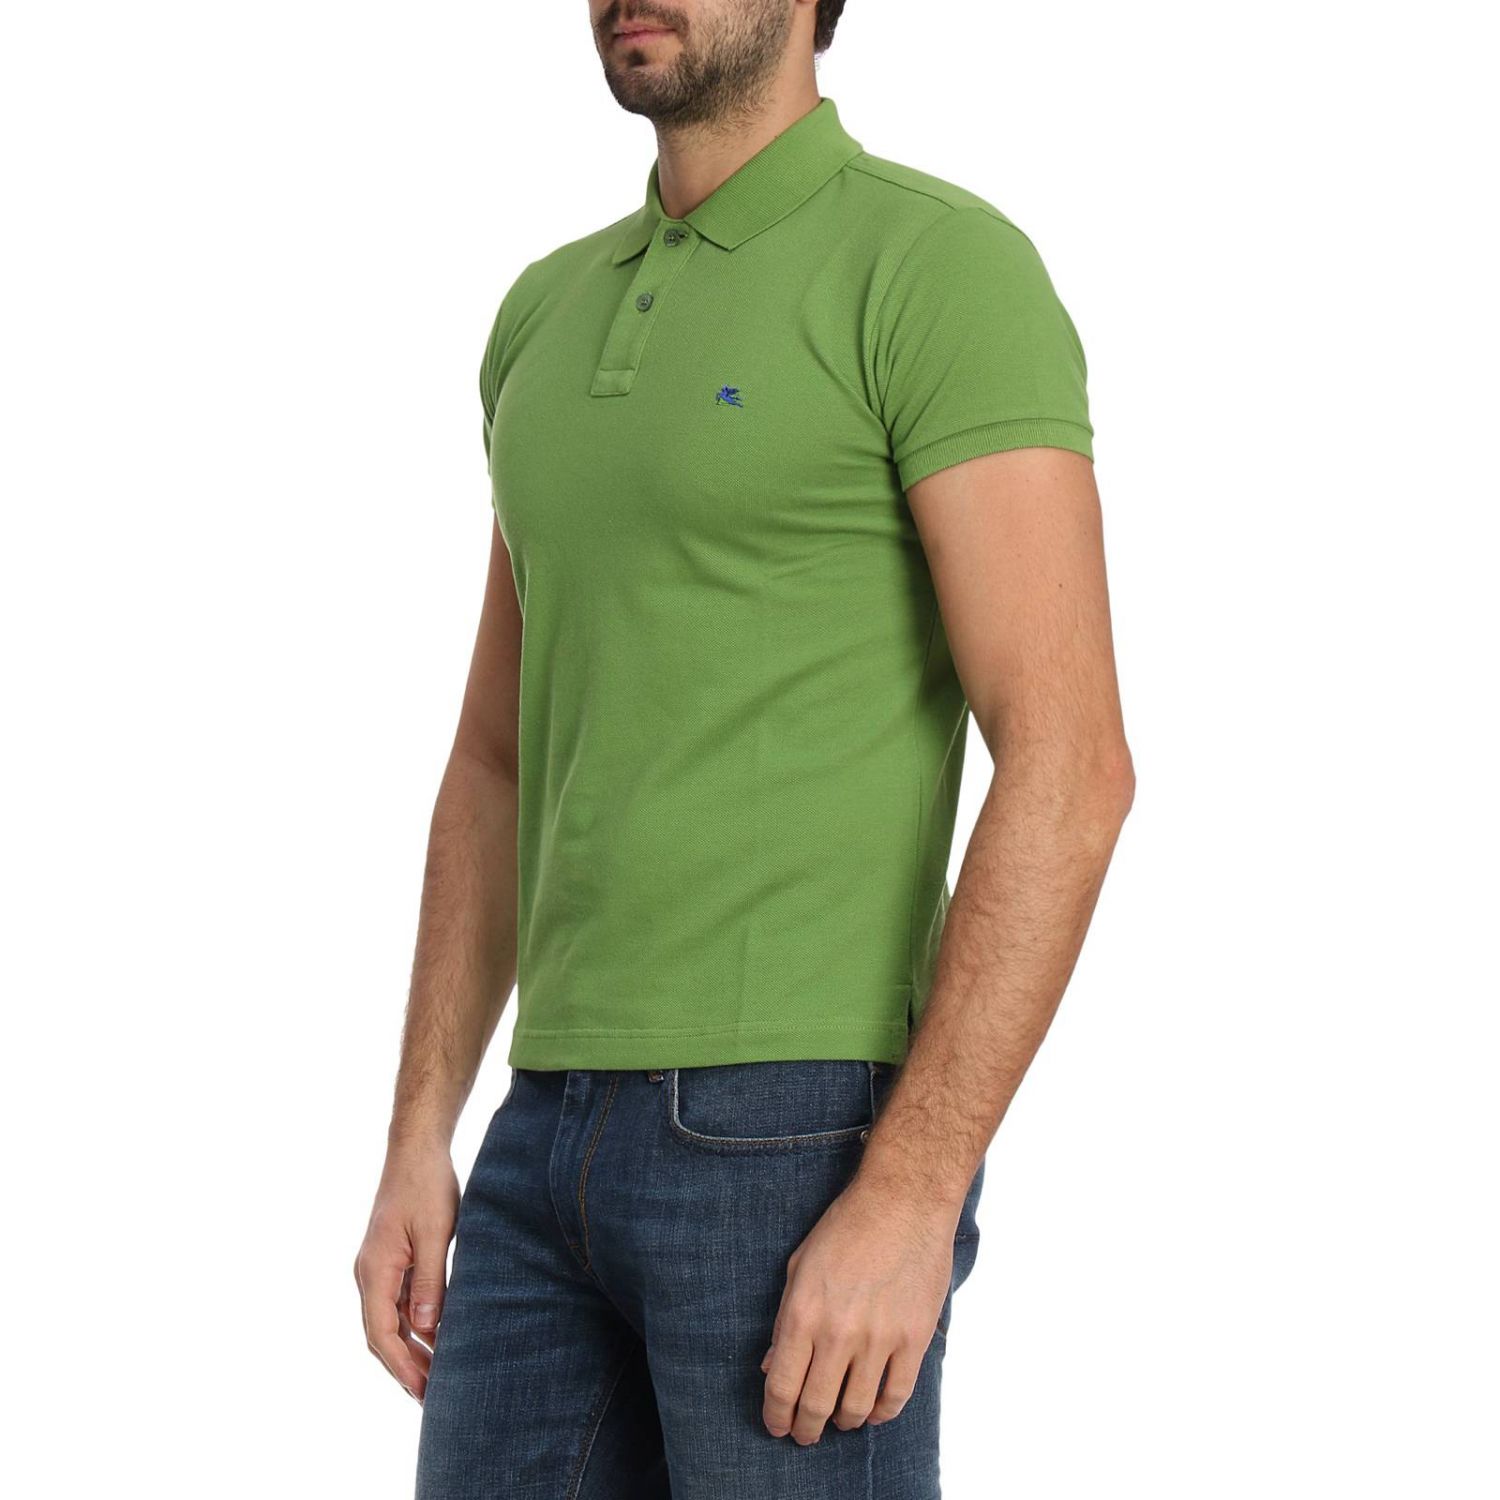 T-shirt men Etro | T-Shirt Etro Men Green | T-Shirt Etro 1Y040 9150 ...